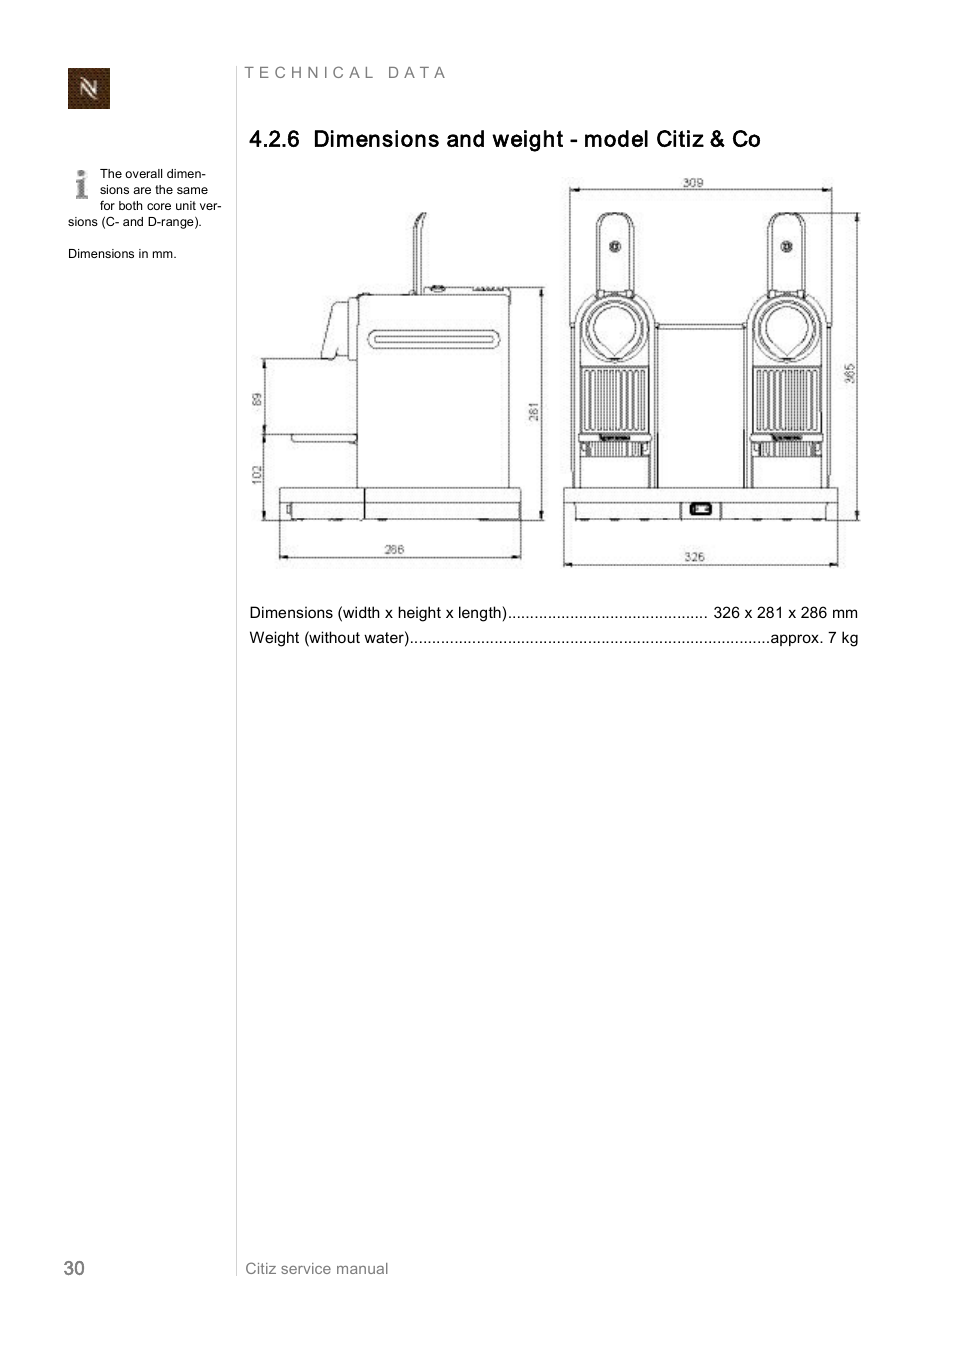 6 dimensions and weight model citiz & co | Nespresso Citiz & Co EF 488 User  Manual | Page 30 / 158 | Original mode